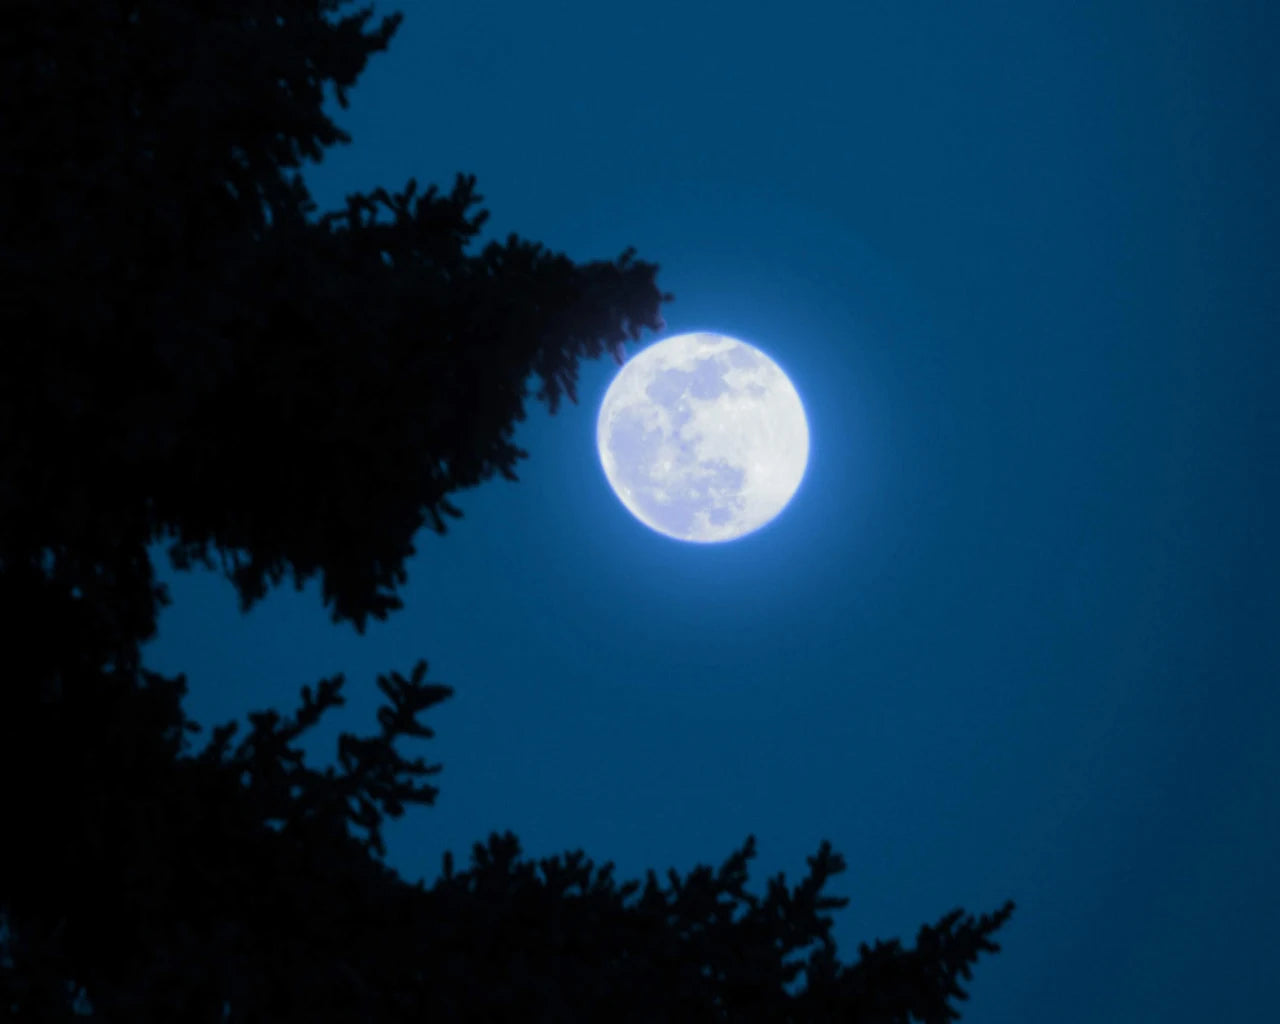 A rare super blue moon